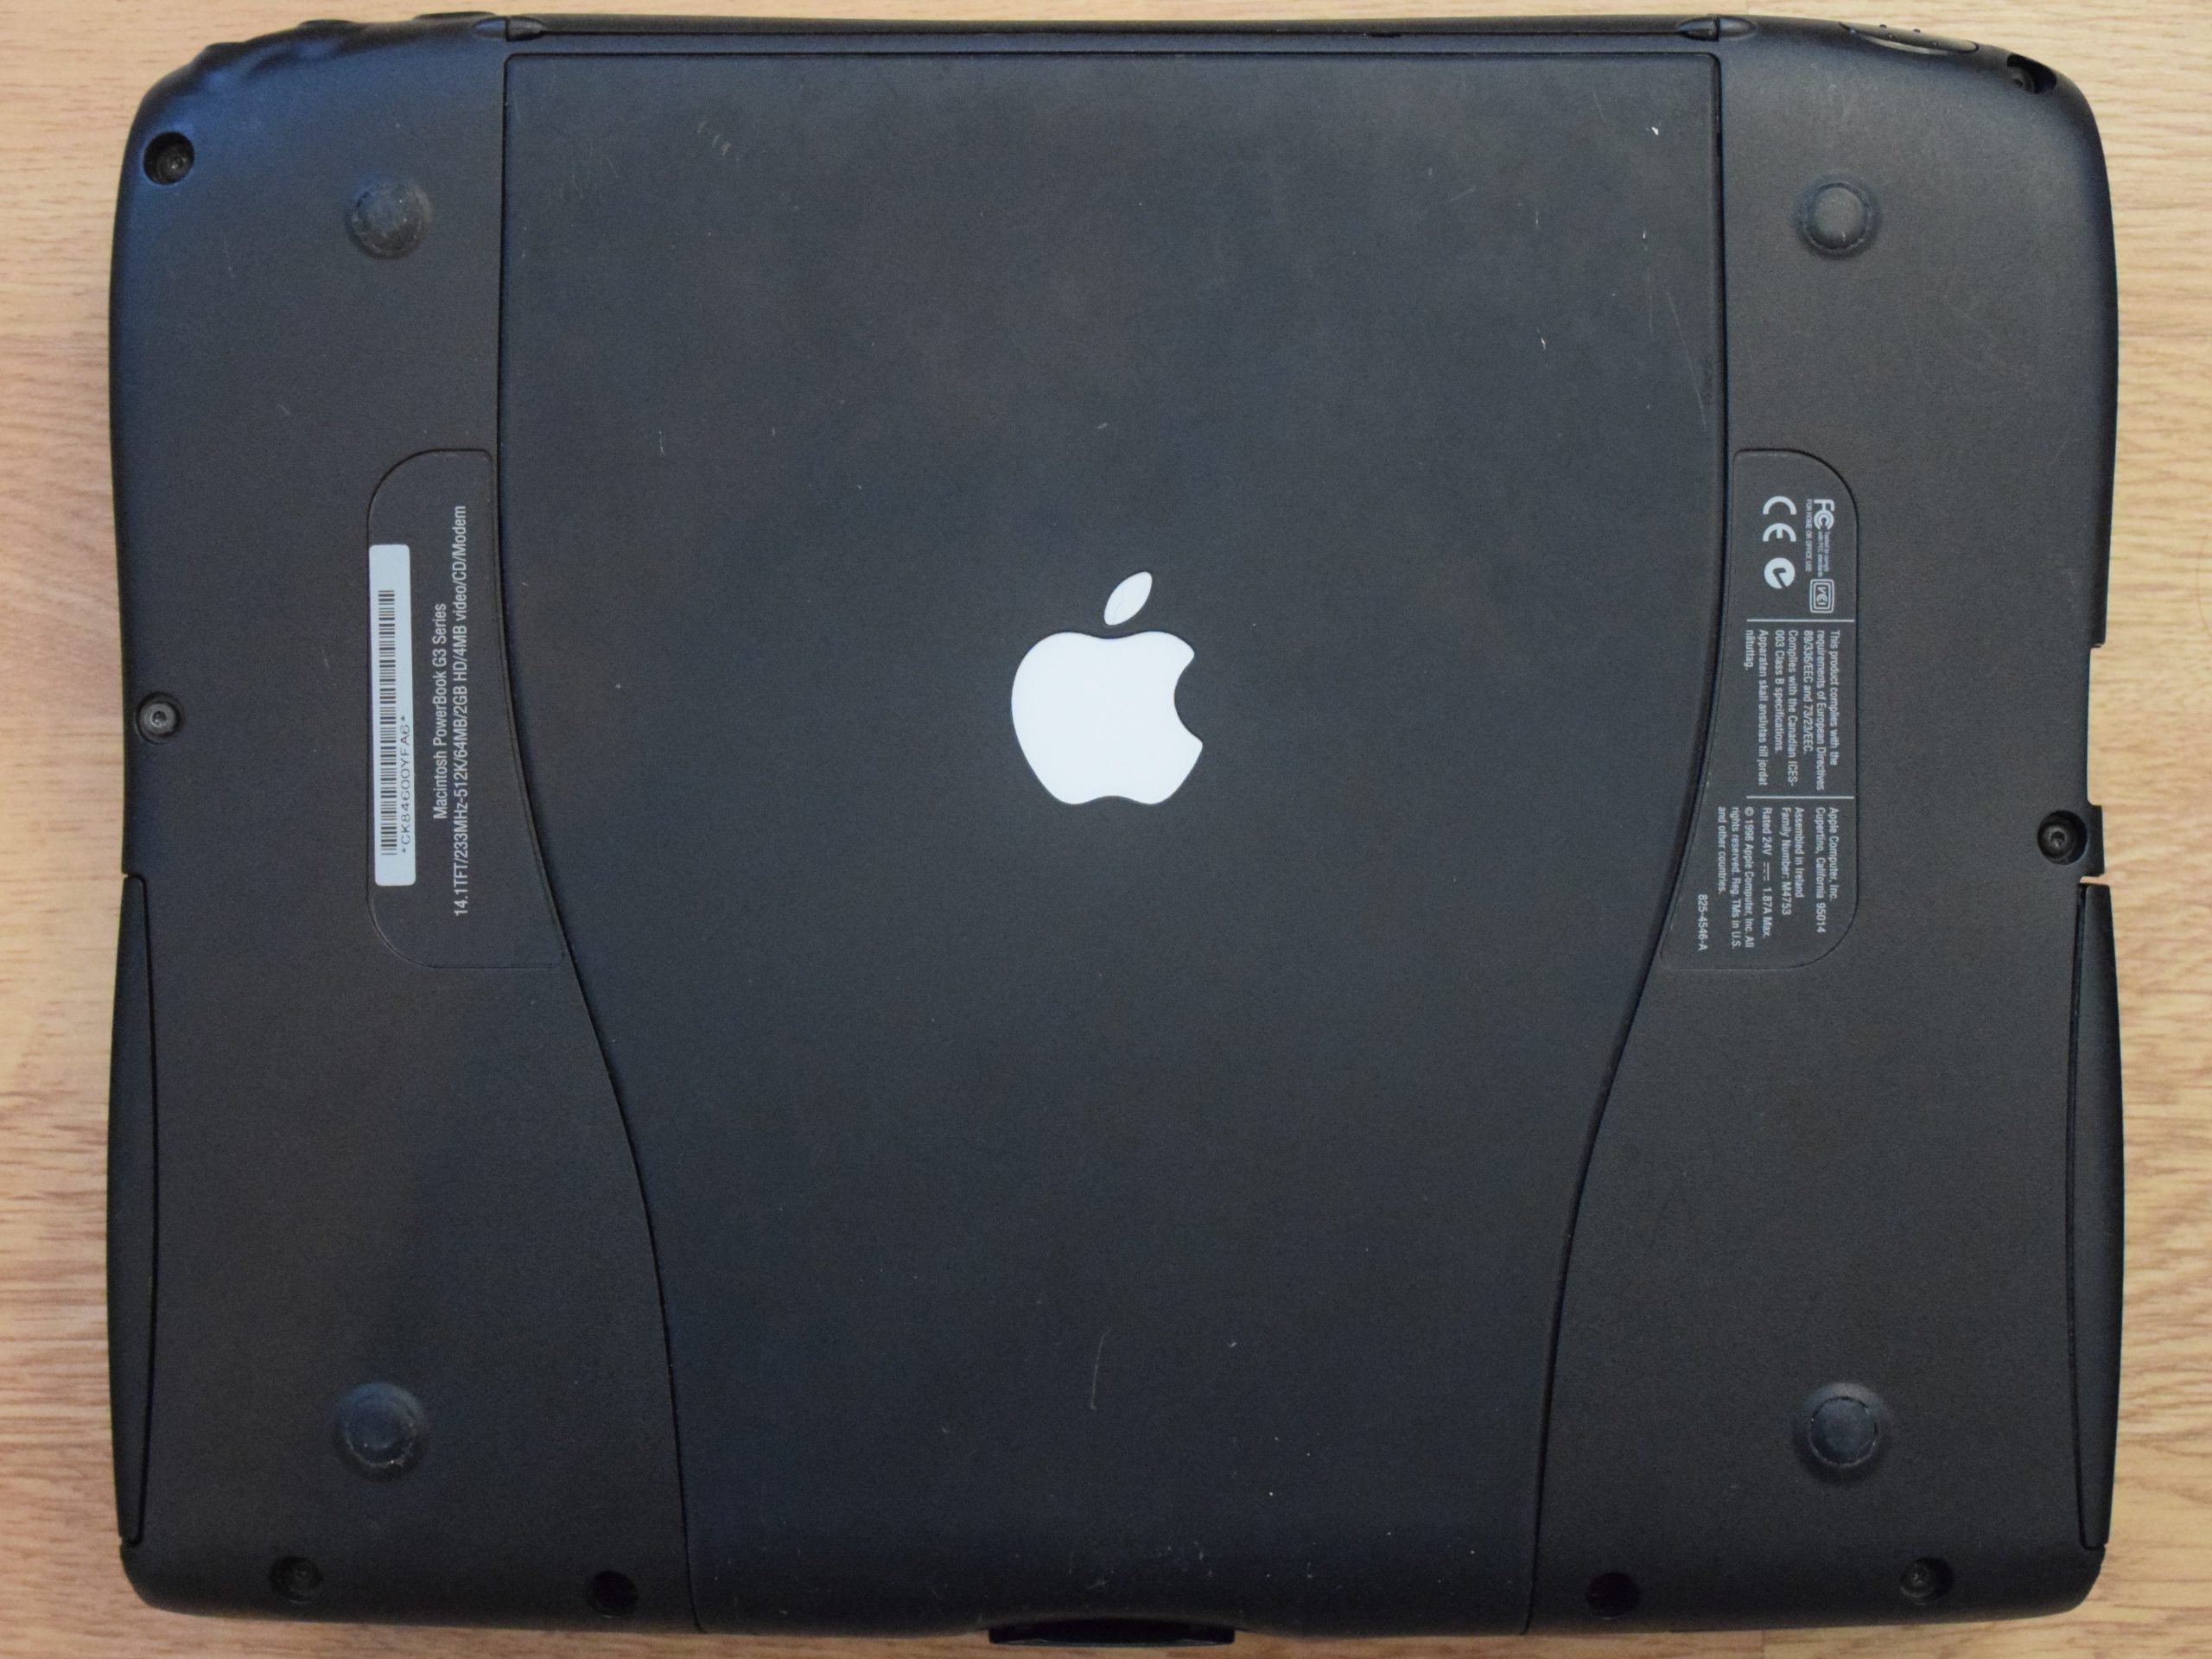 Apple PowerBook Série G3 - dessous